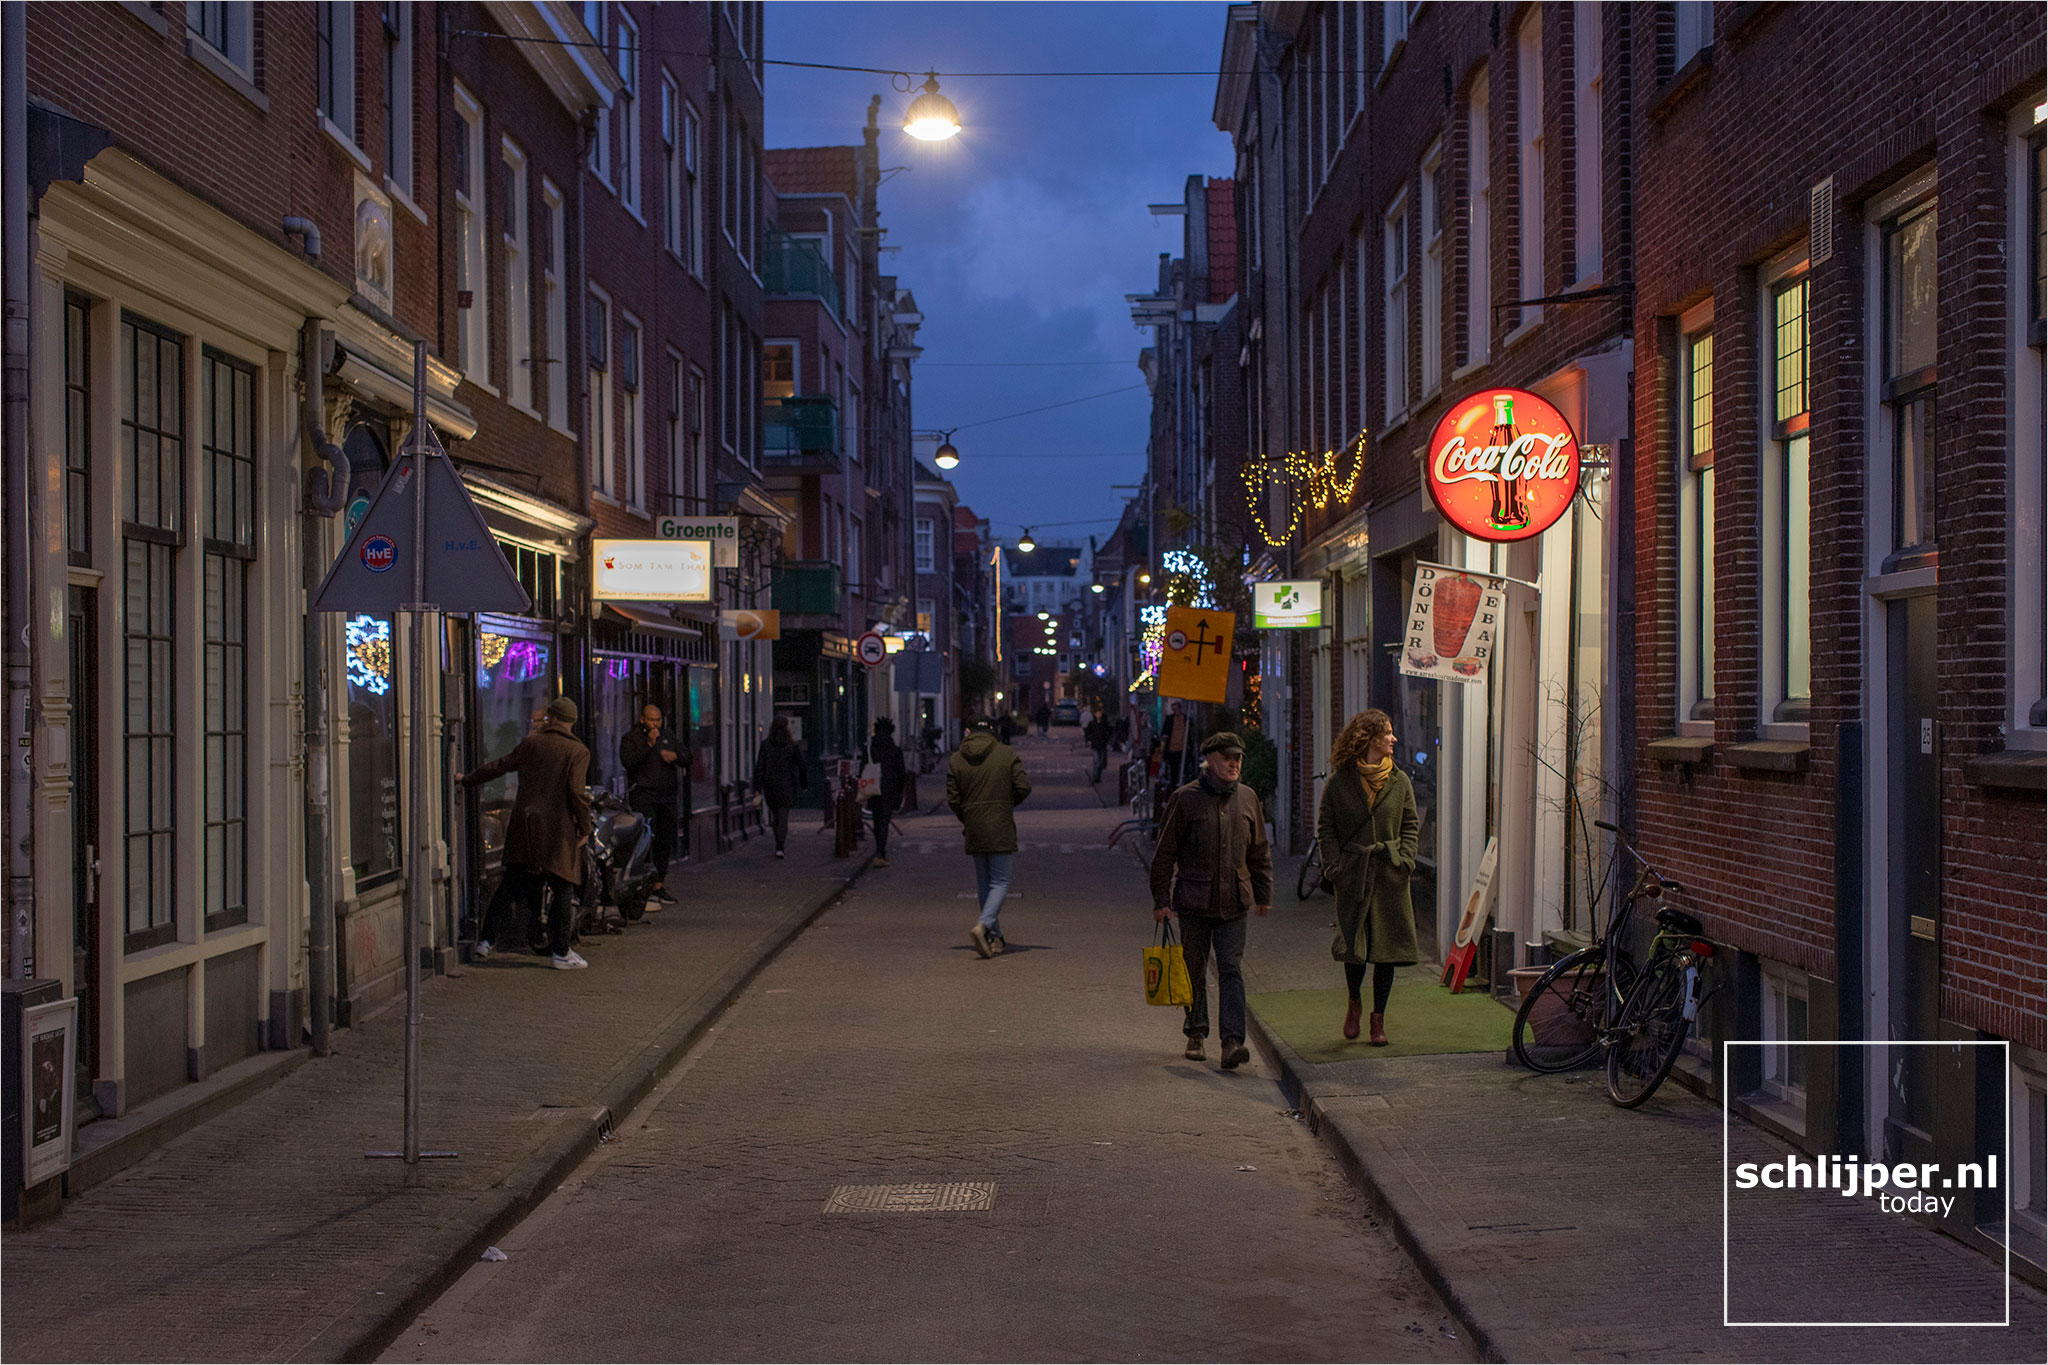 The Netherlands, Amsterdam, 20 december 2020